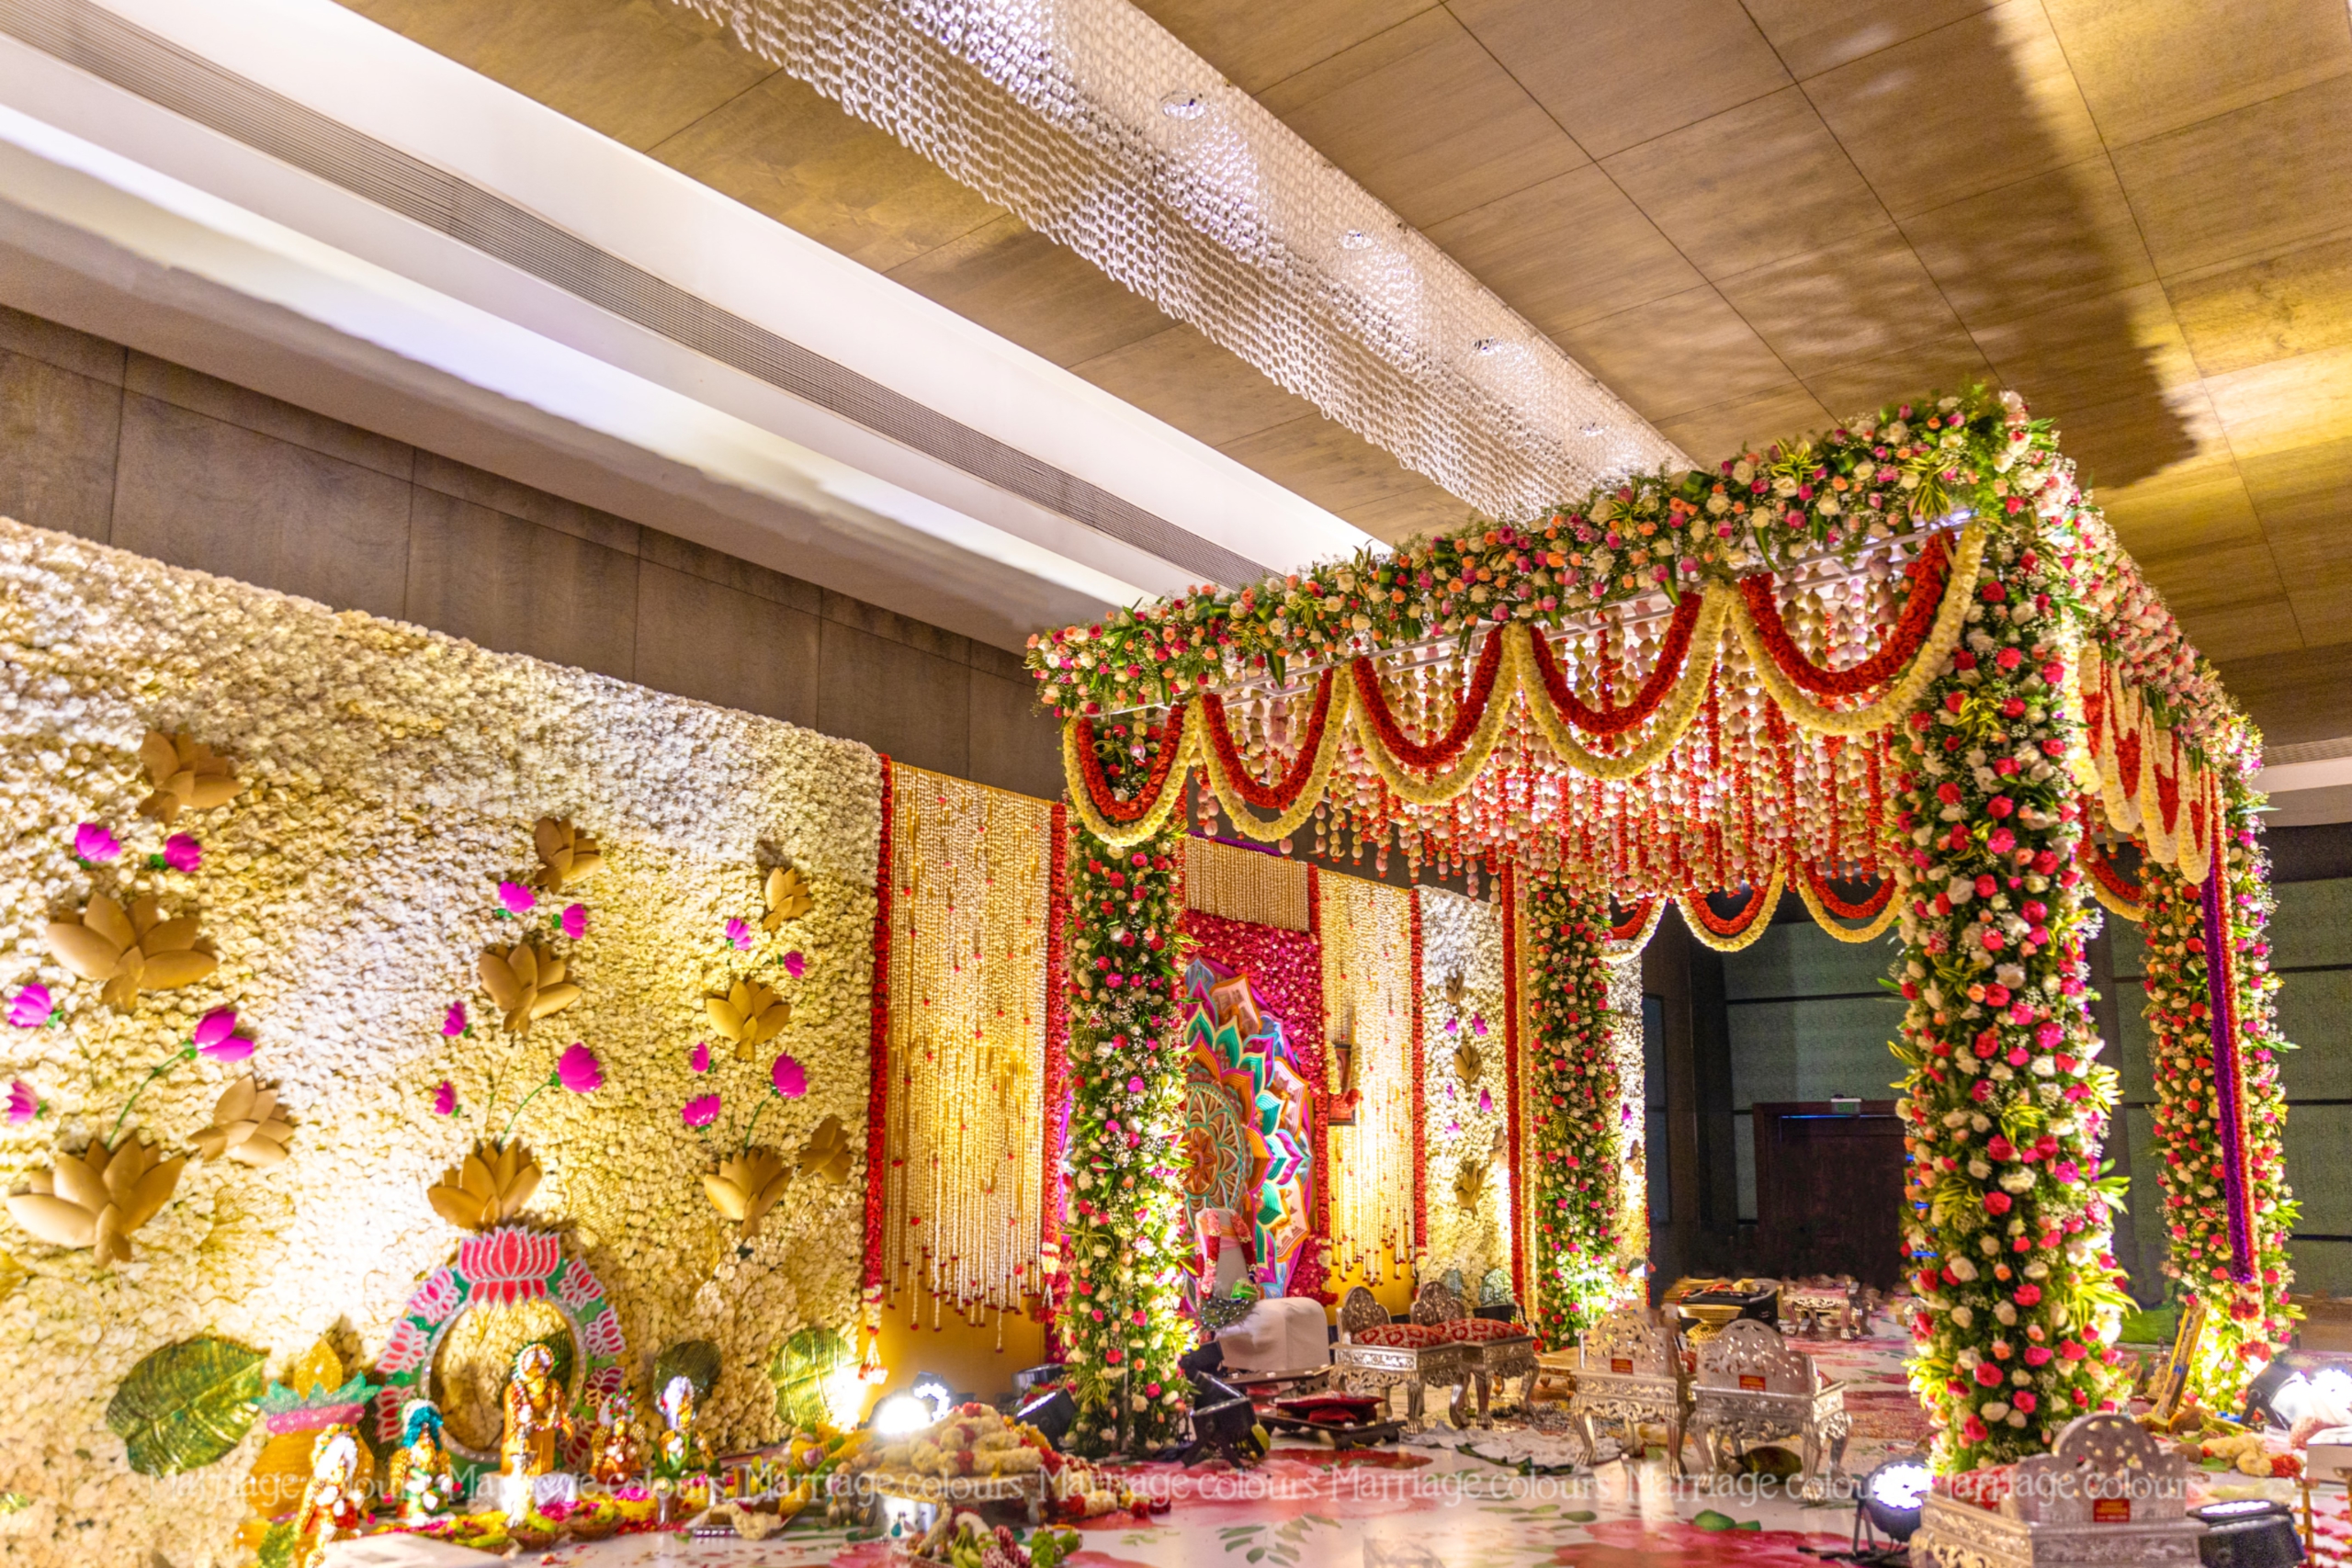 How to Decorate Mandap for Wedding? | Mandap Decorations